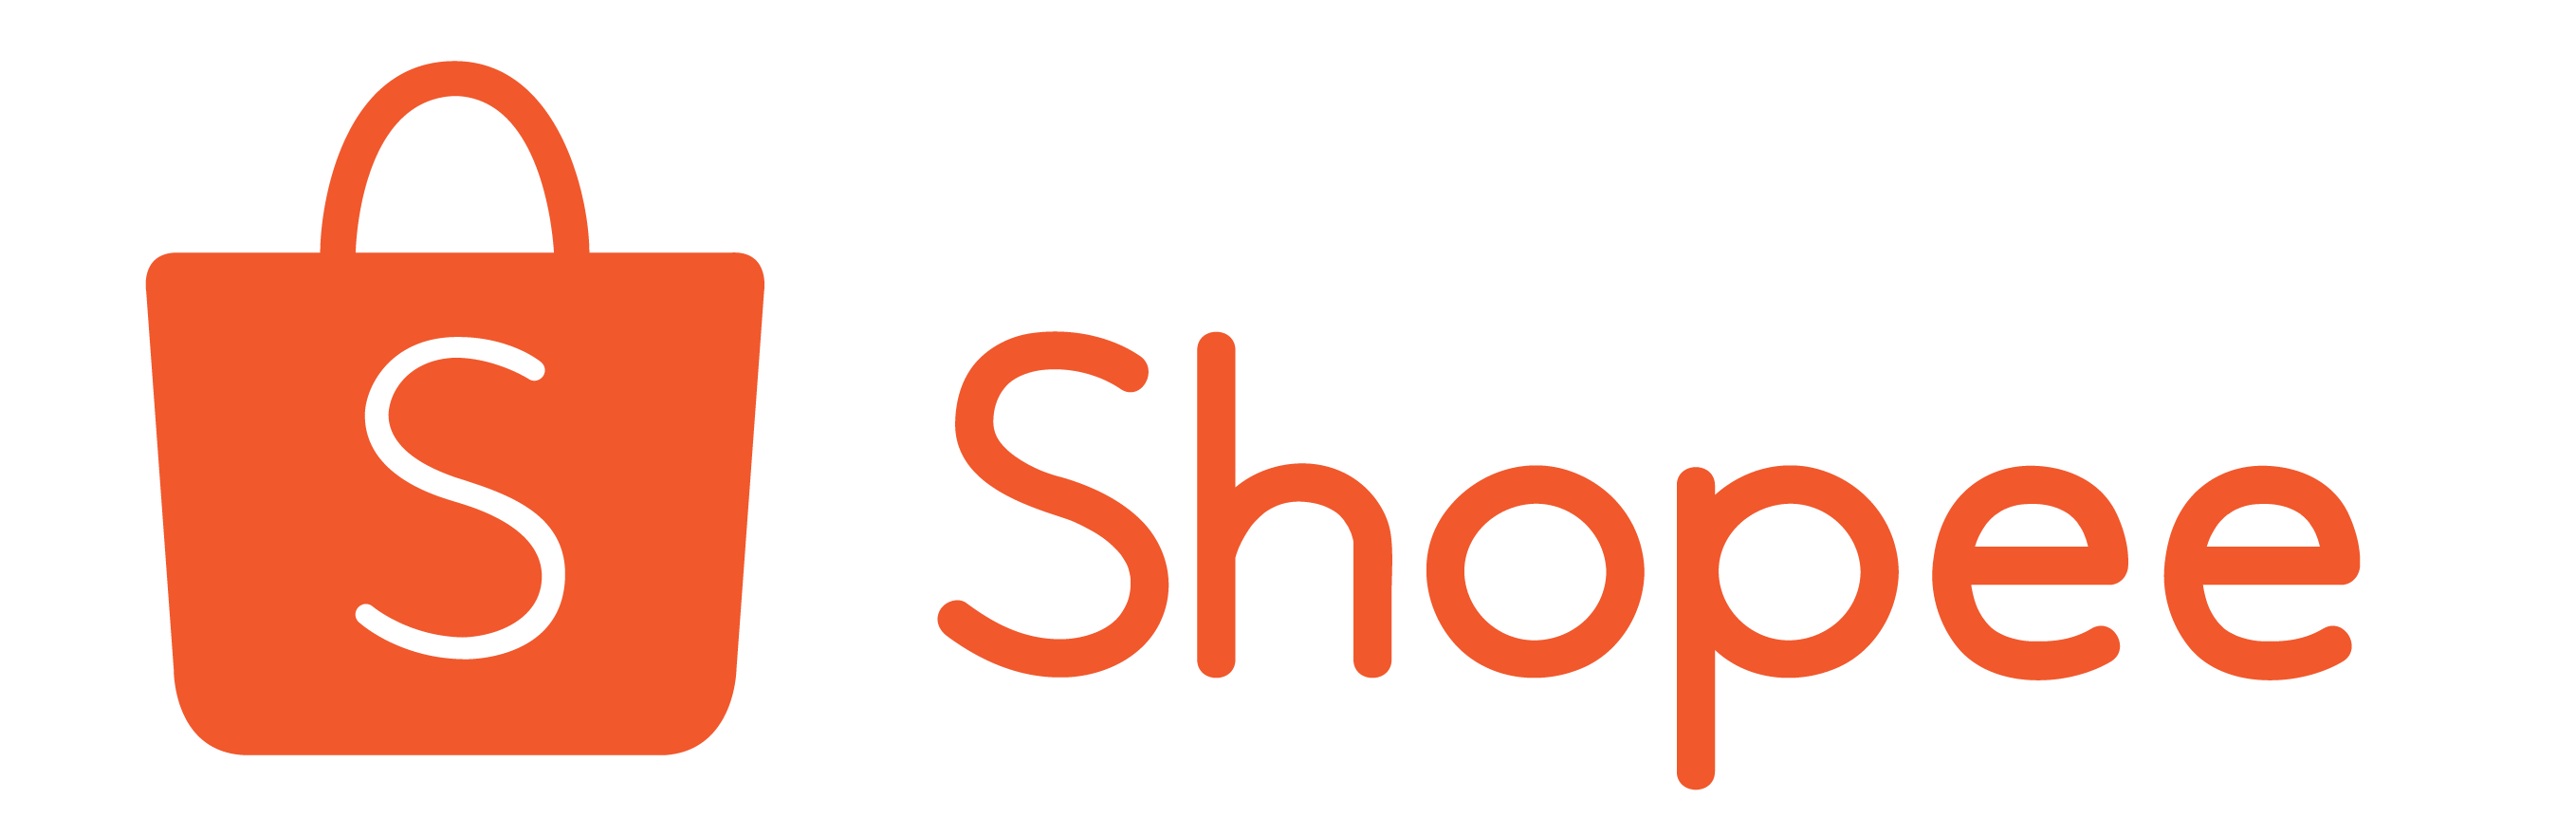 Shopee logo Icon in Popular brands Vol5